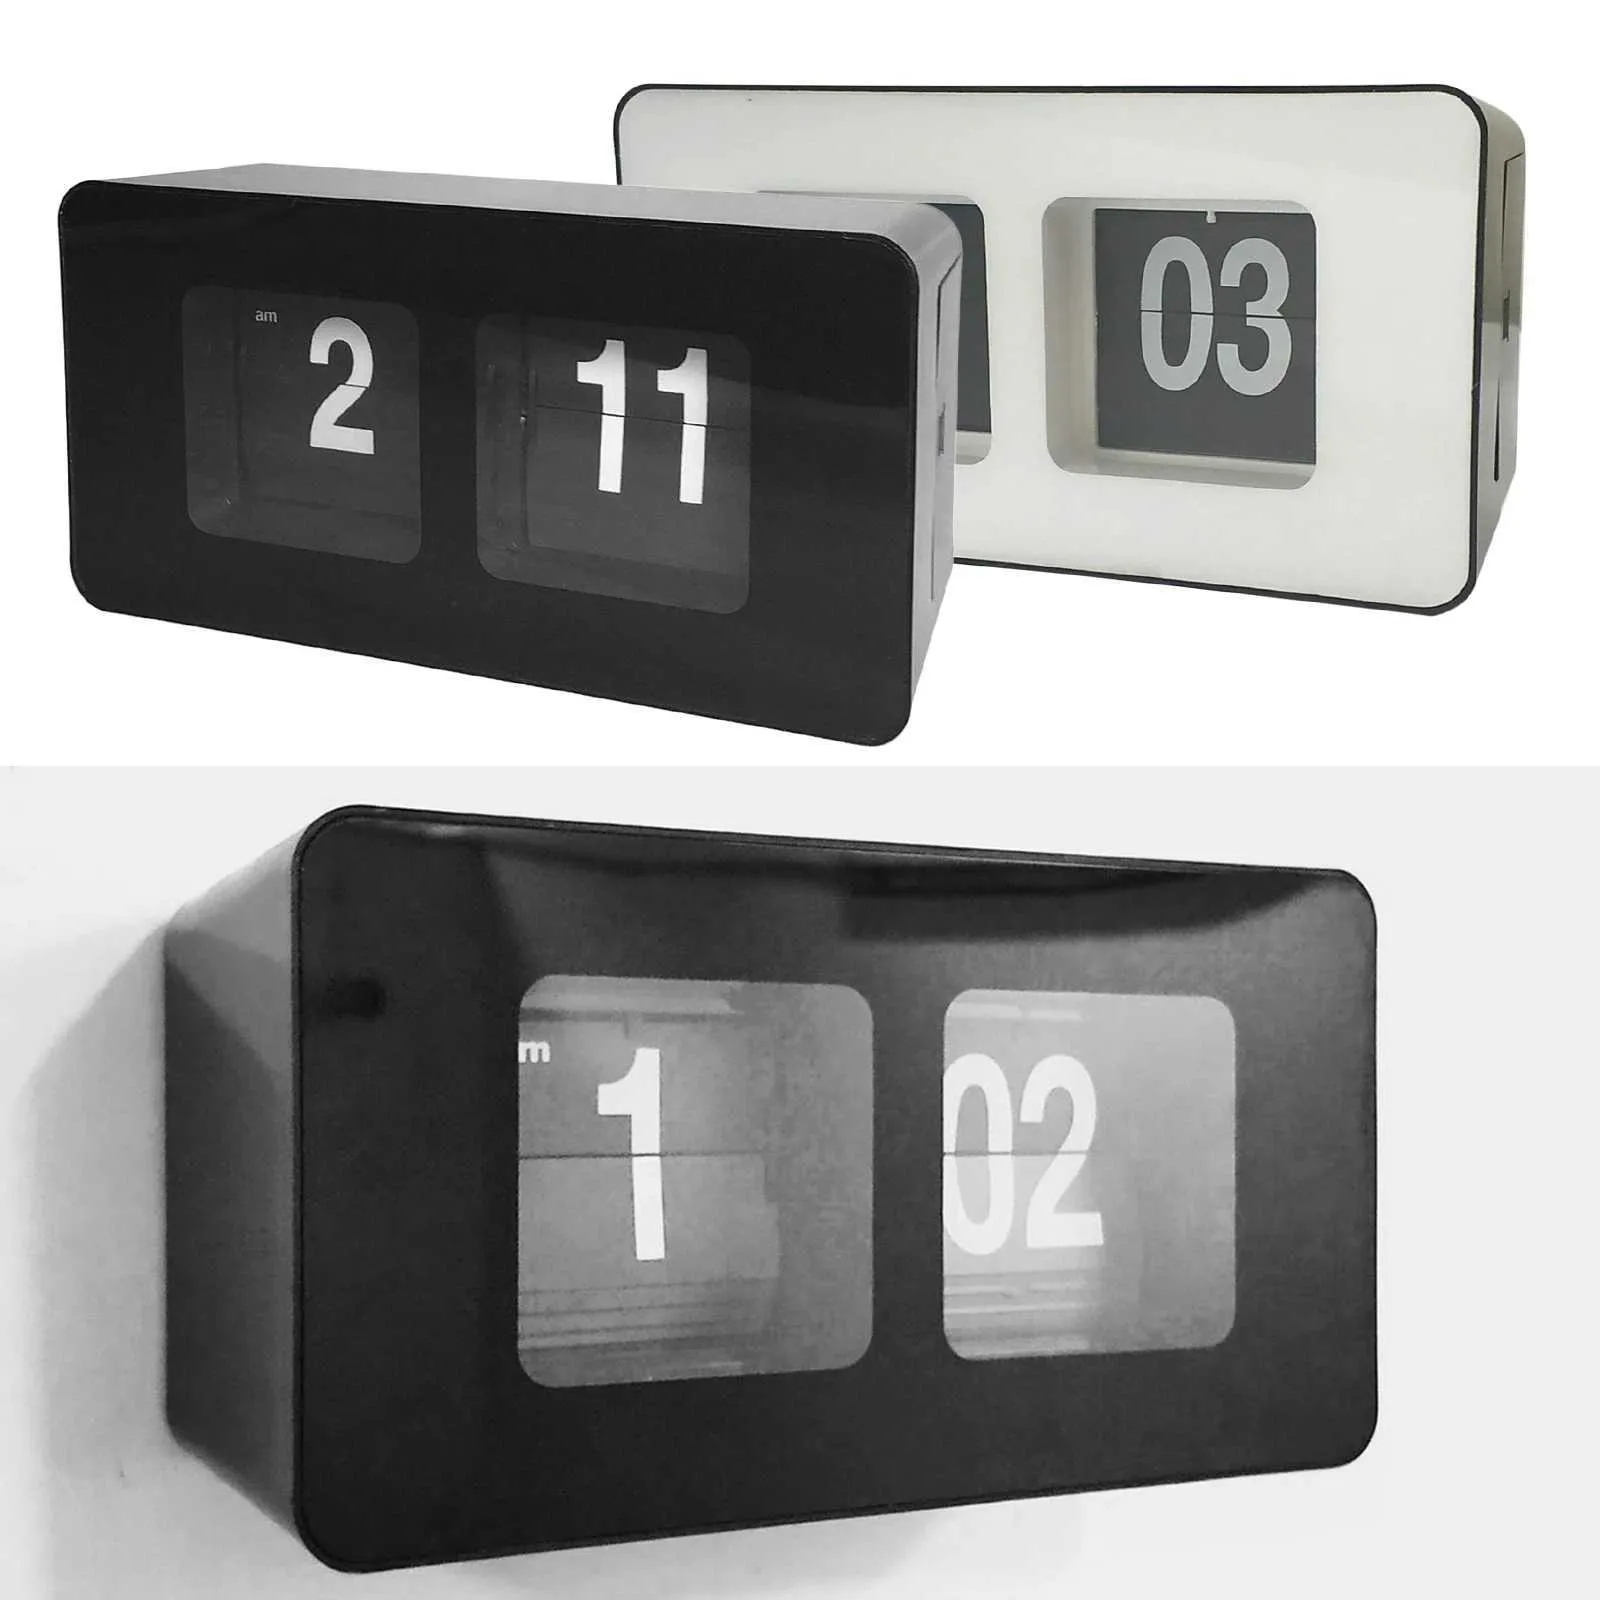 Auto Flip Clock File Down Page Clocks Desk Clock Smart Light Clock for Home